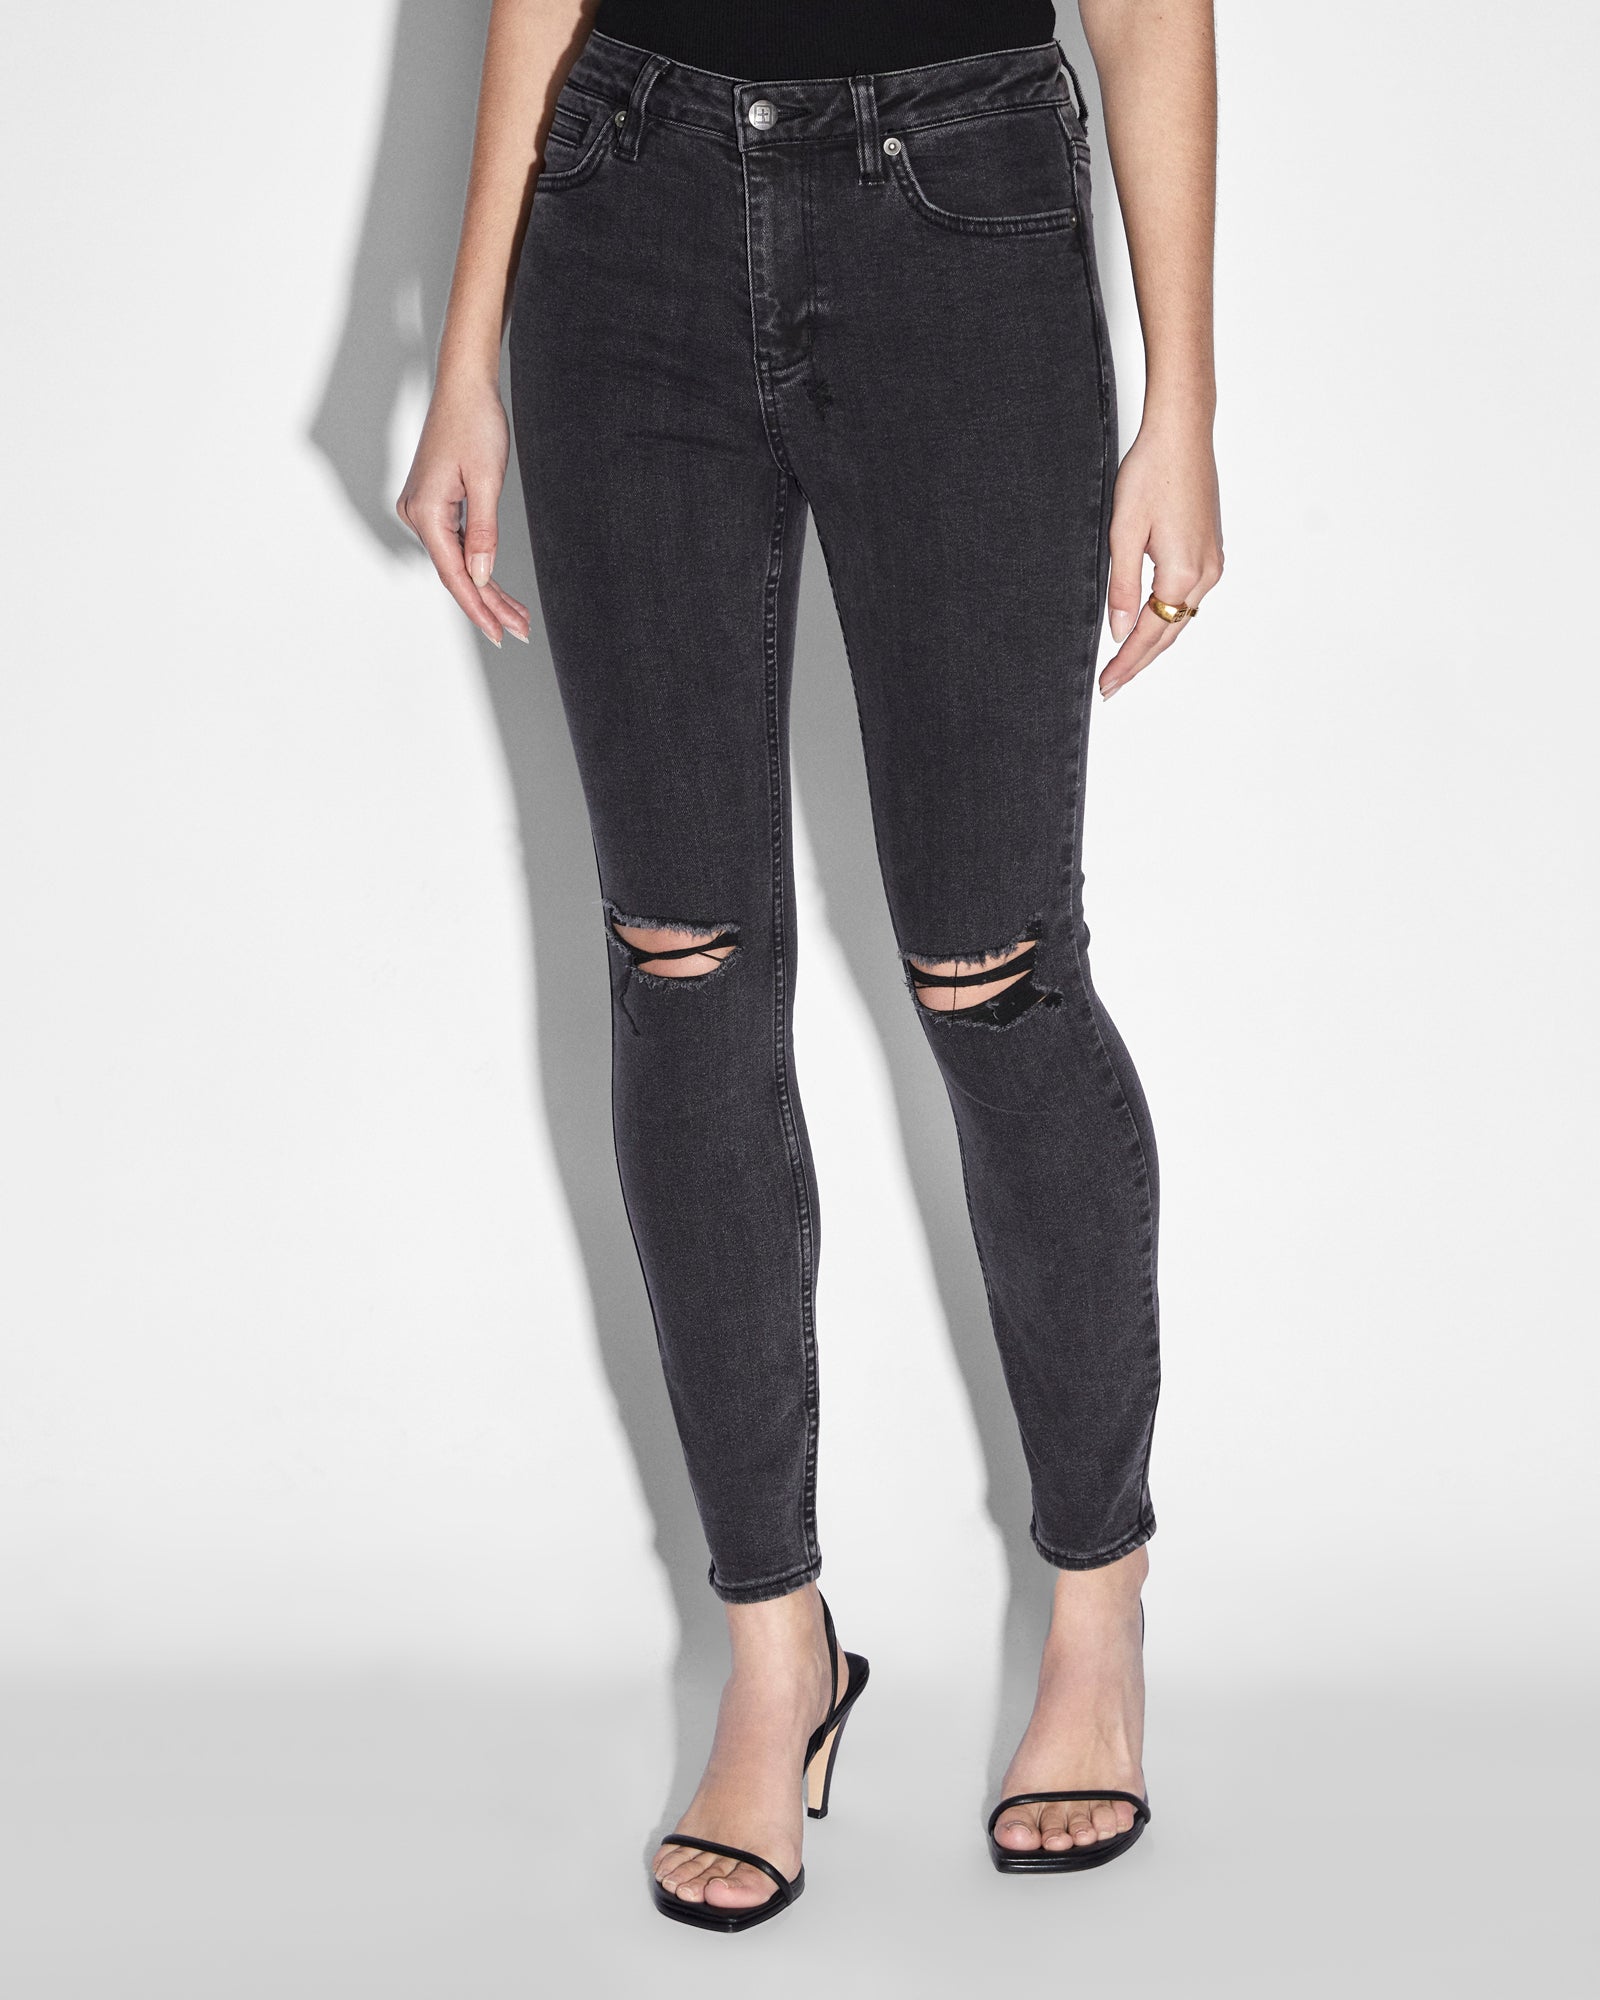 Playfeel Women's Denim Slim Fit Solid Knee Cut Black Distressed Jeans  (PFWJ-019)